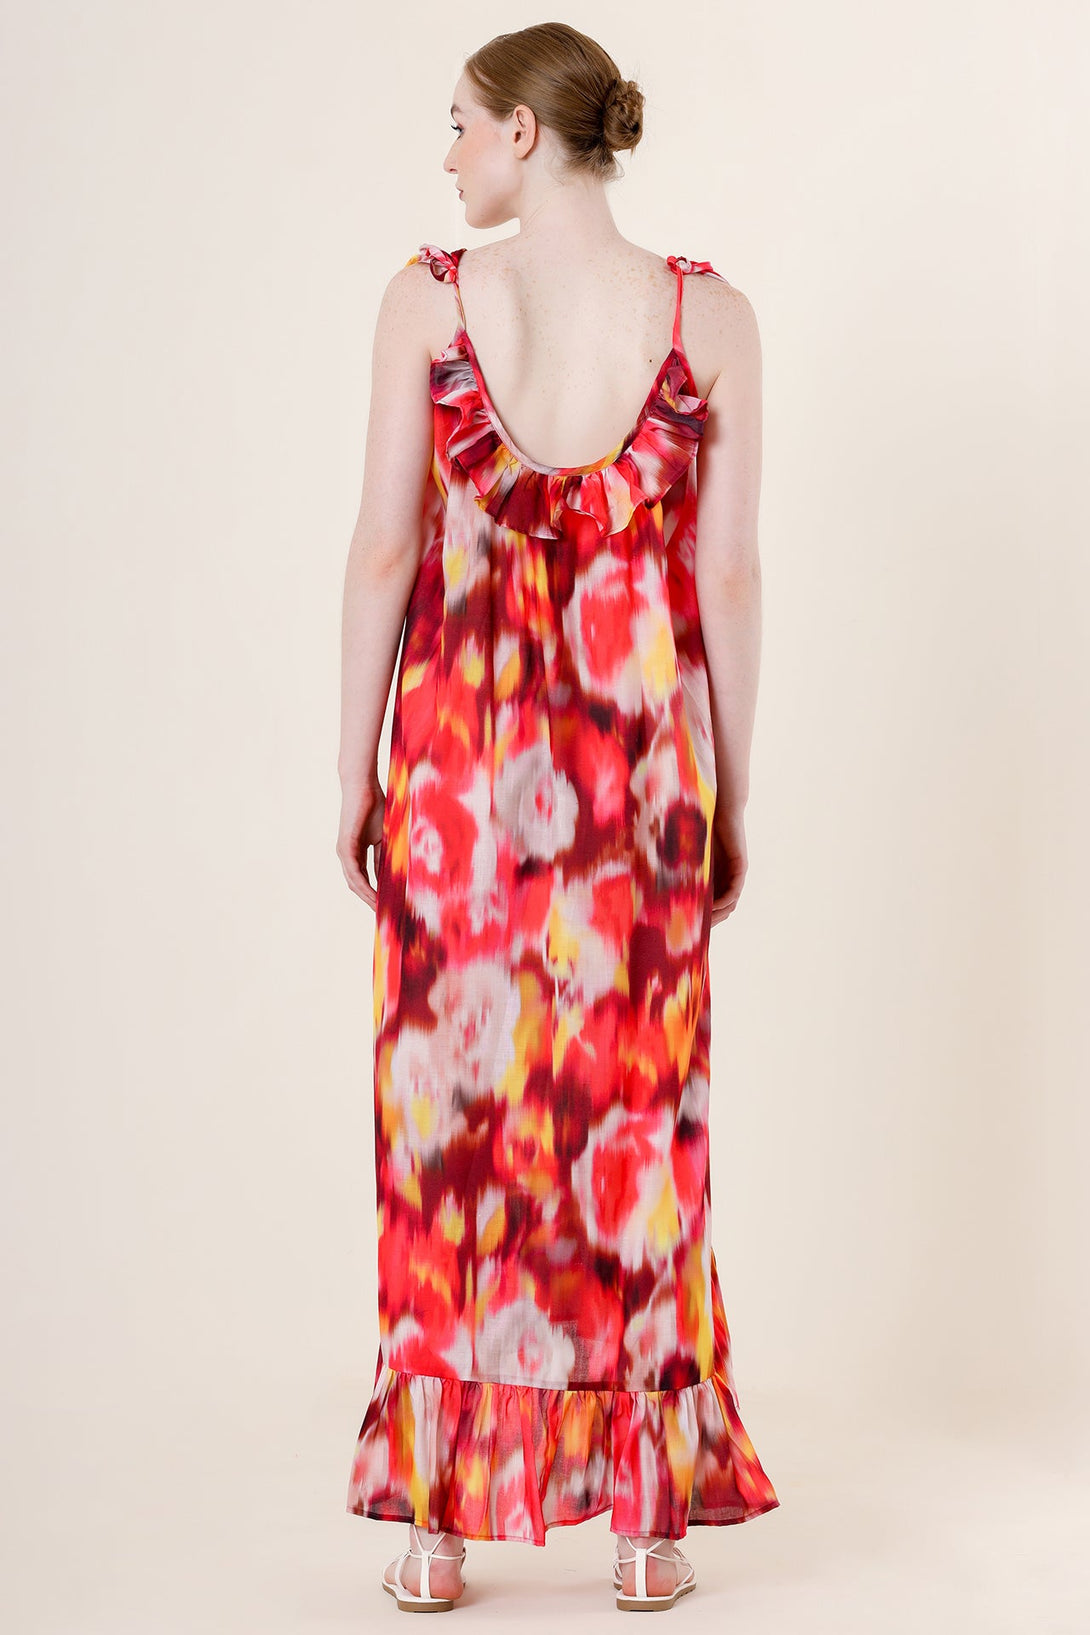 "orange formal dress long" "floor length dress" "floral print dress maxi" "floral maxi dress"